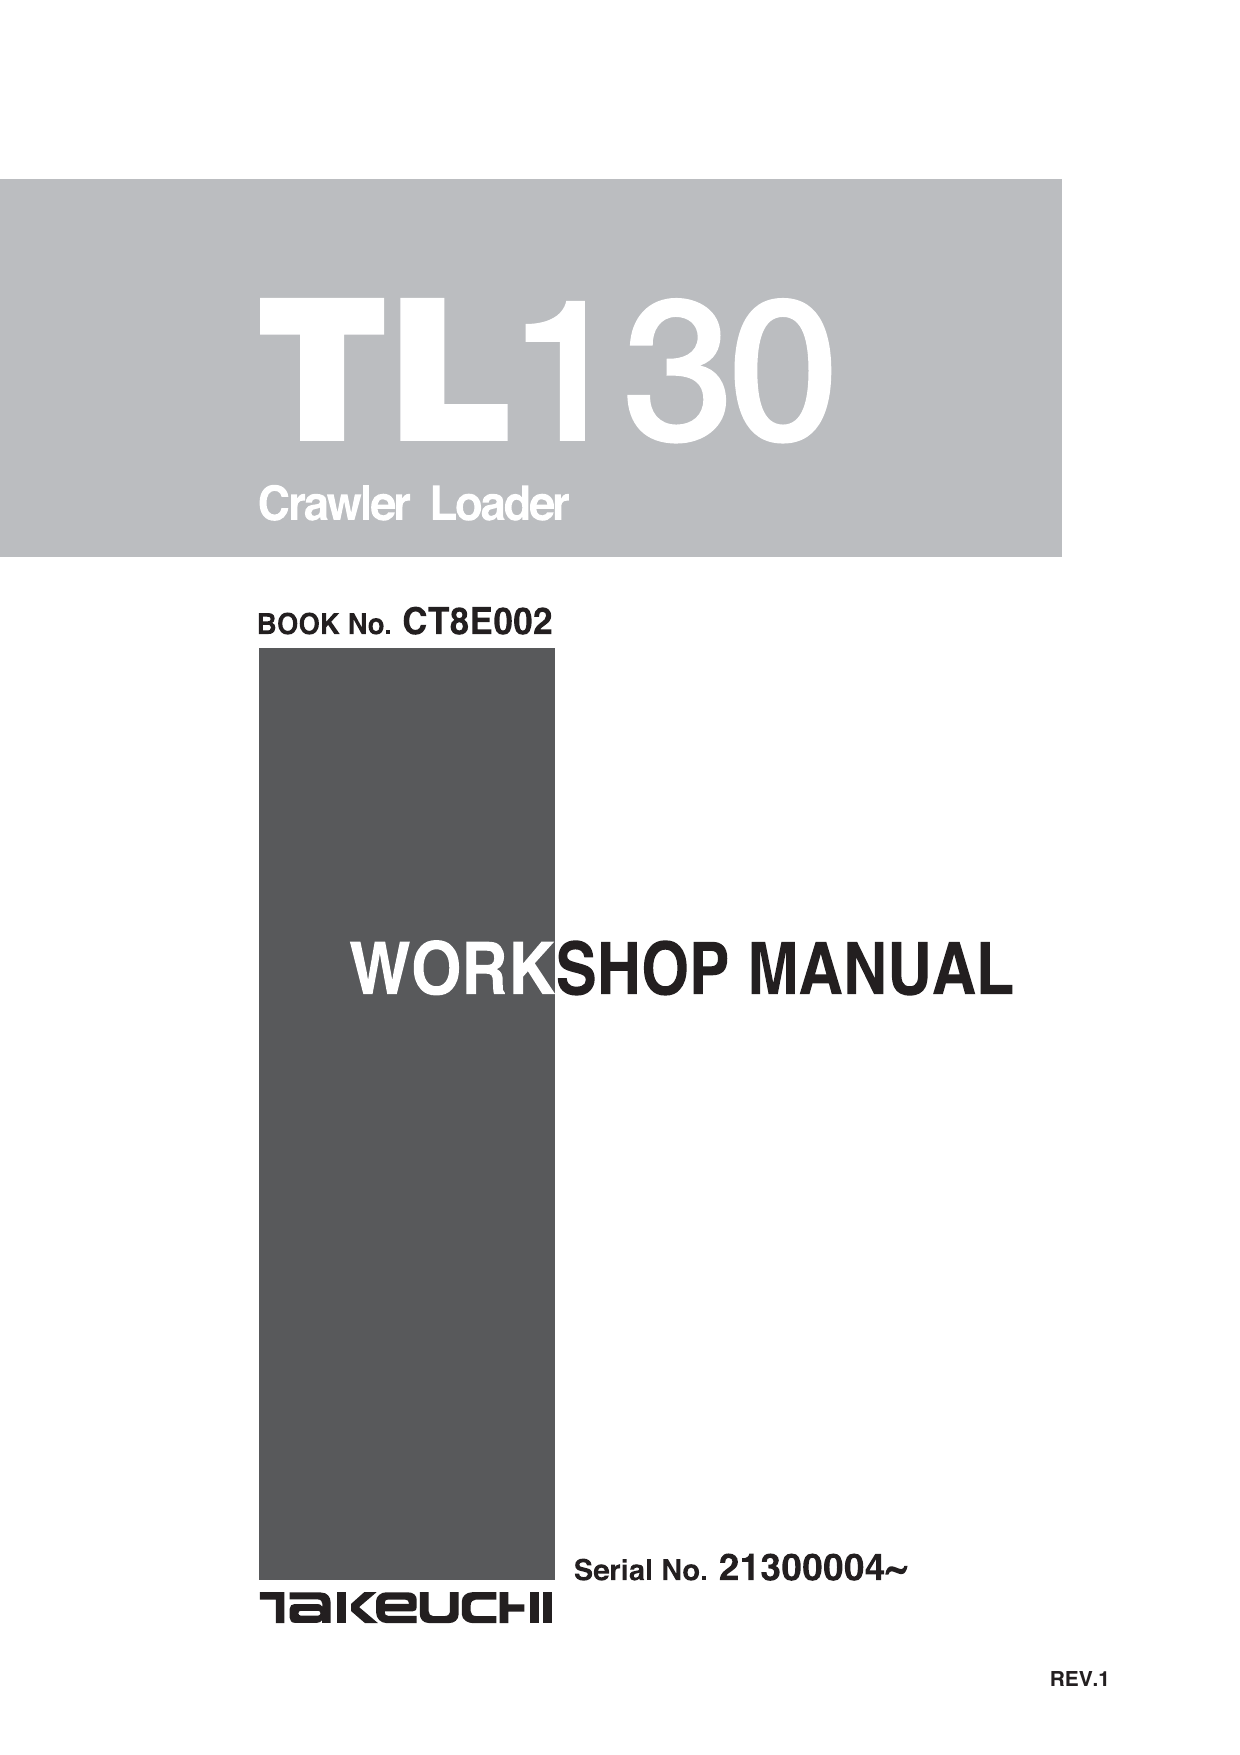 Takeuchi TL130 Crawler Loader workshop manual Preview image 6